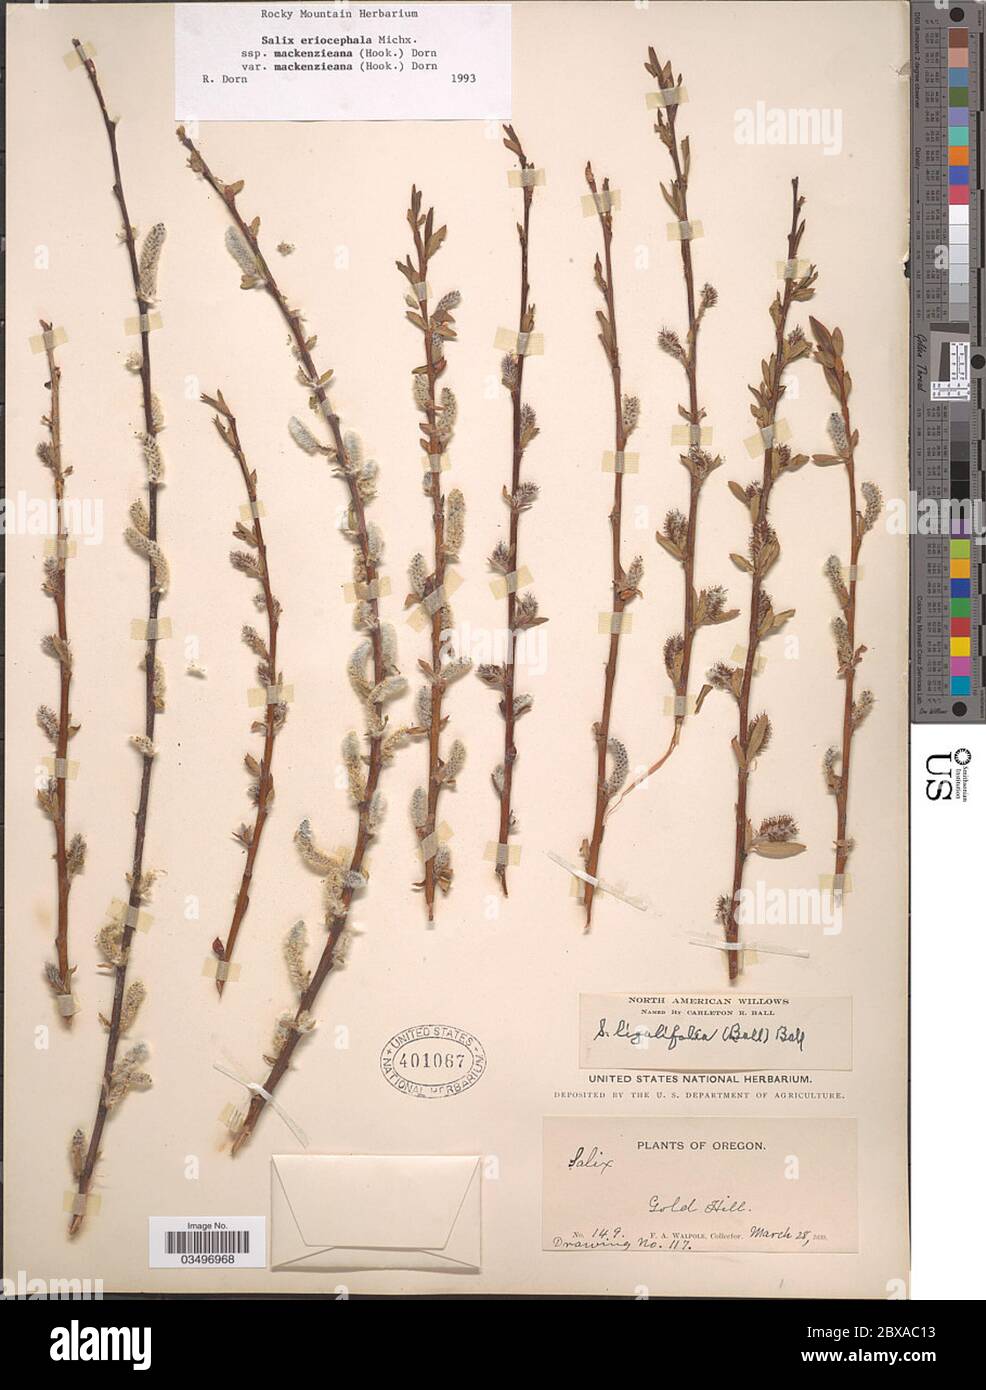 Salix eriocephala subsp mackenziena var mackenzieana Salix eriocephala subsp mackenziena var mackenzieana. Stock Photo